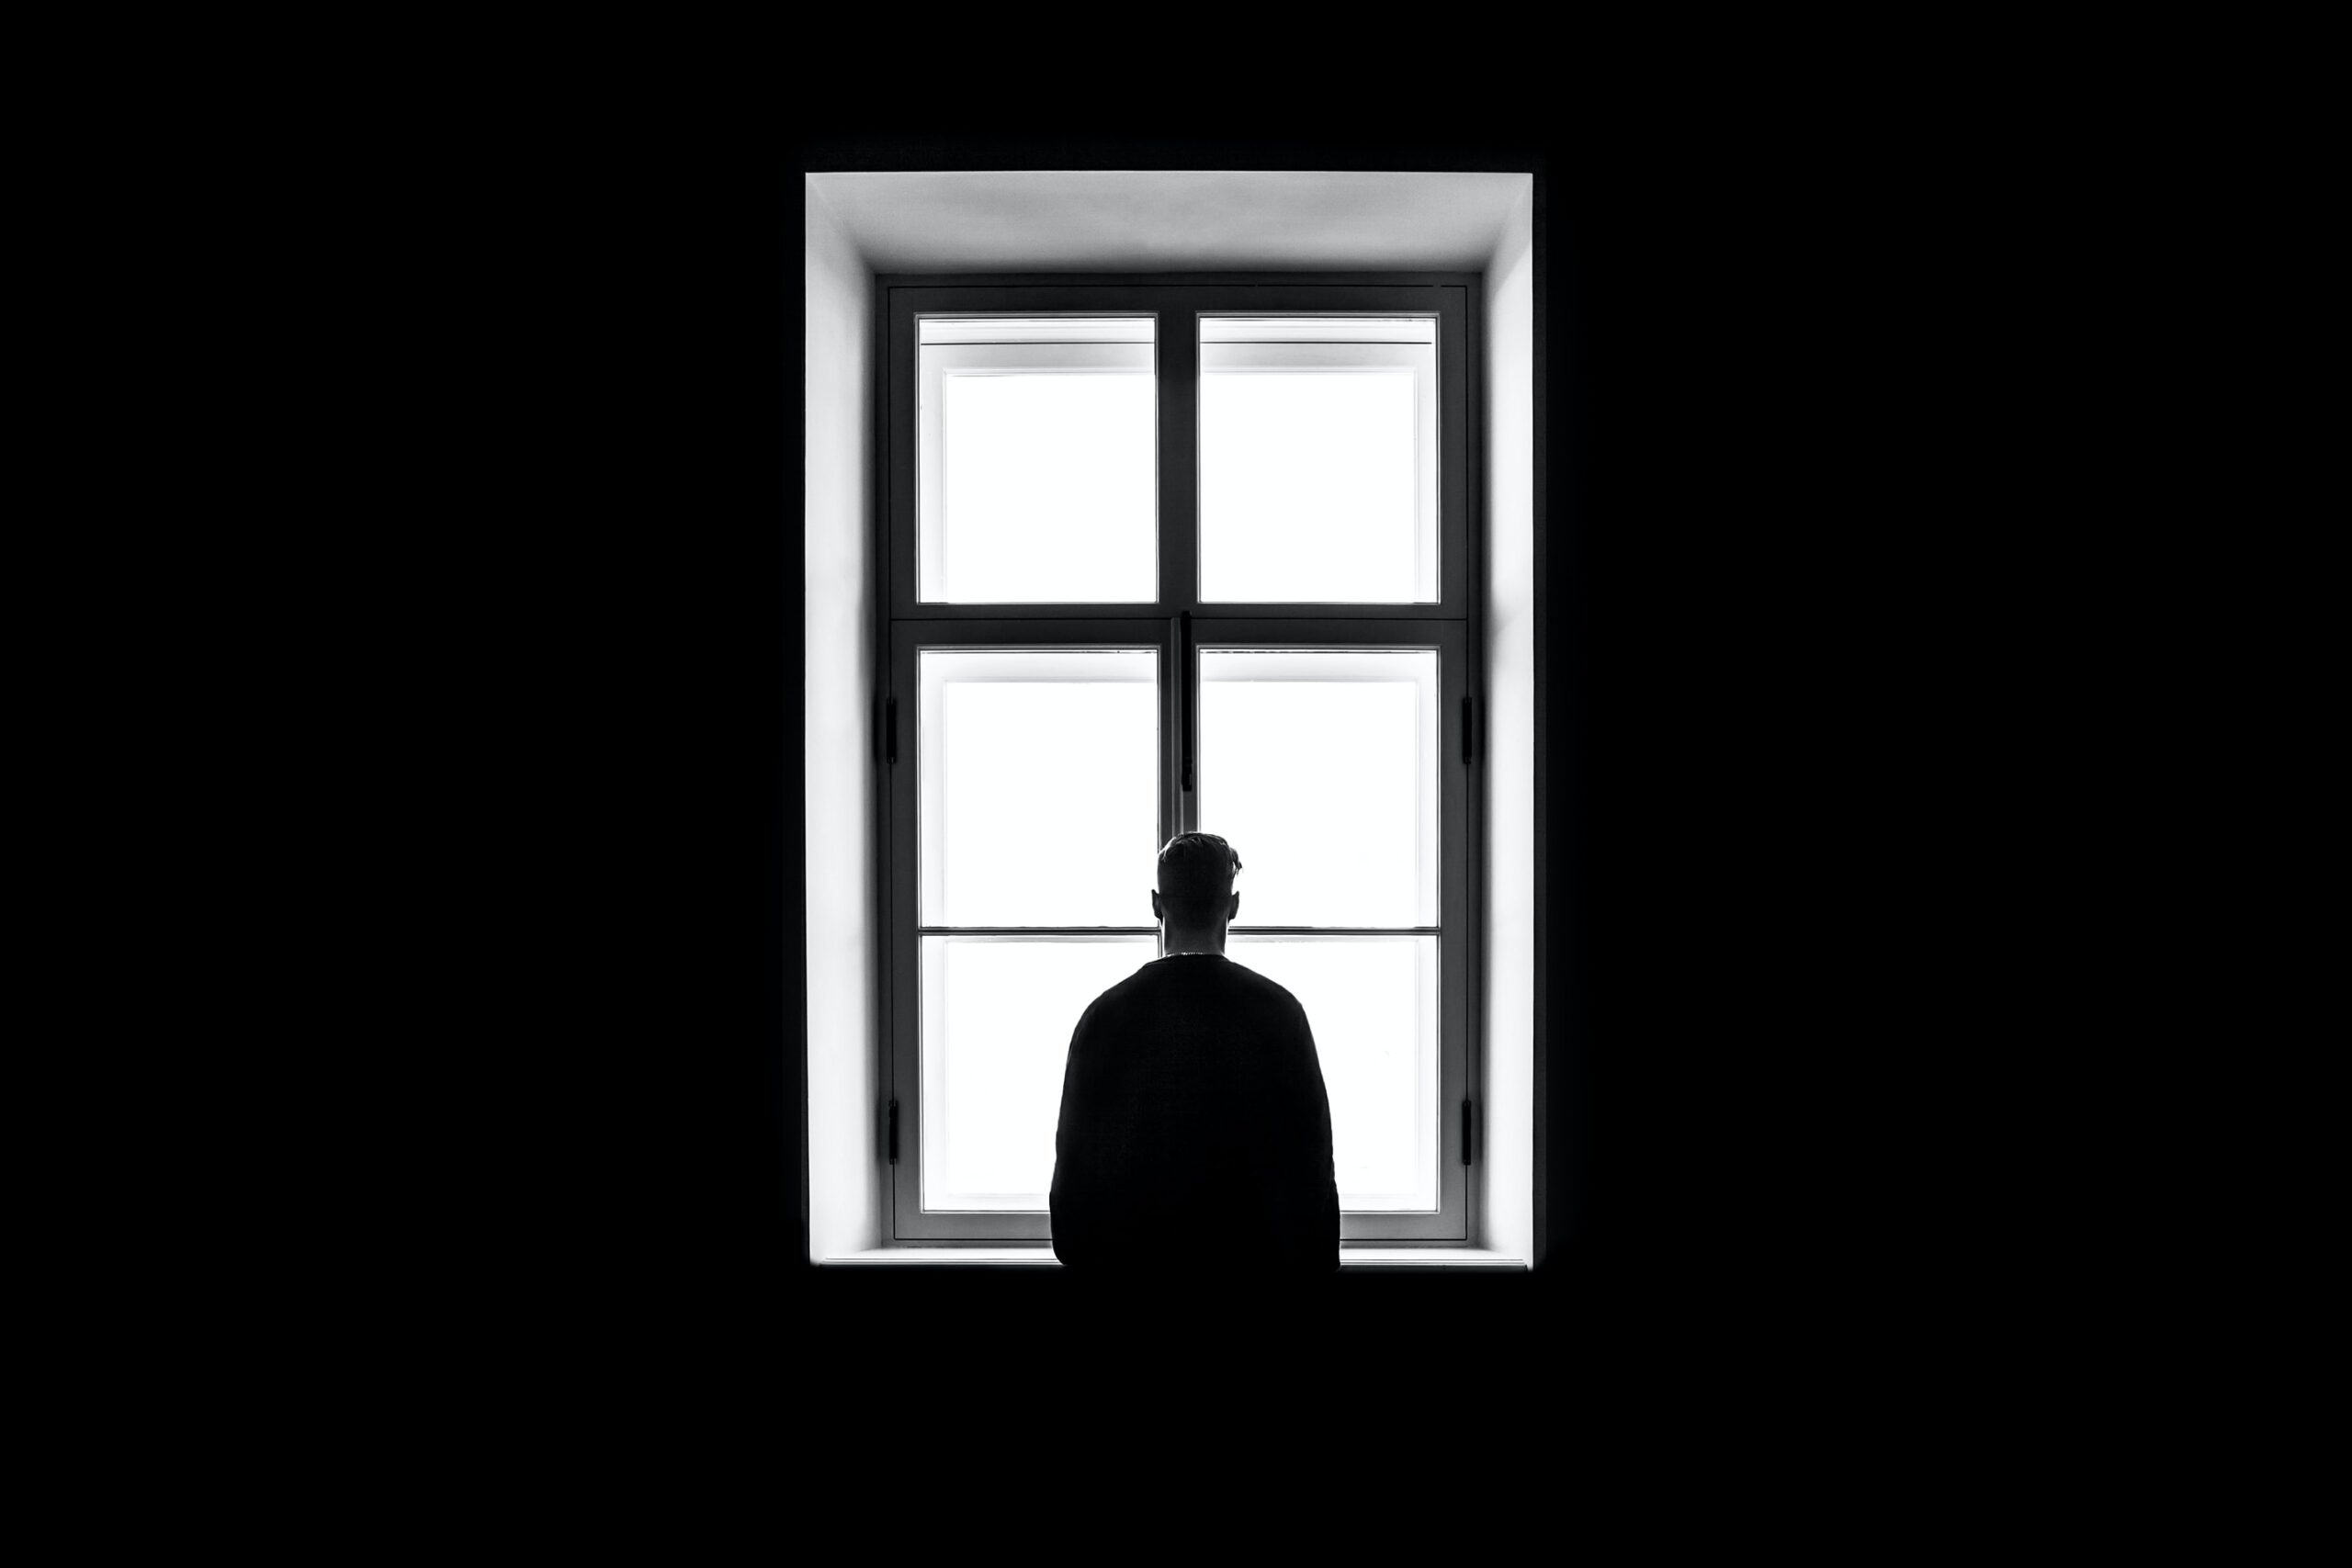 Man standing in front of window